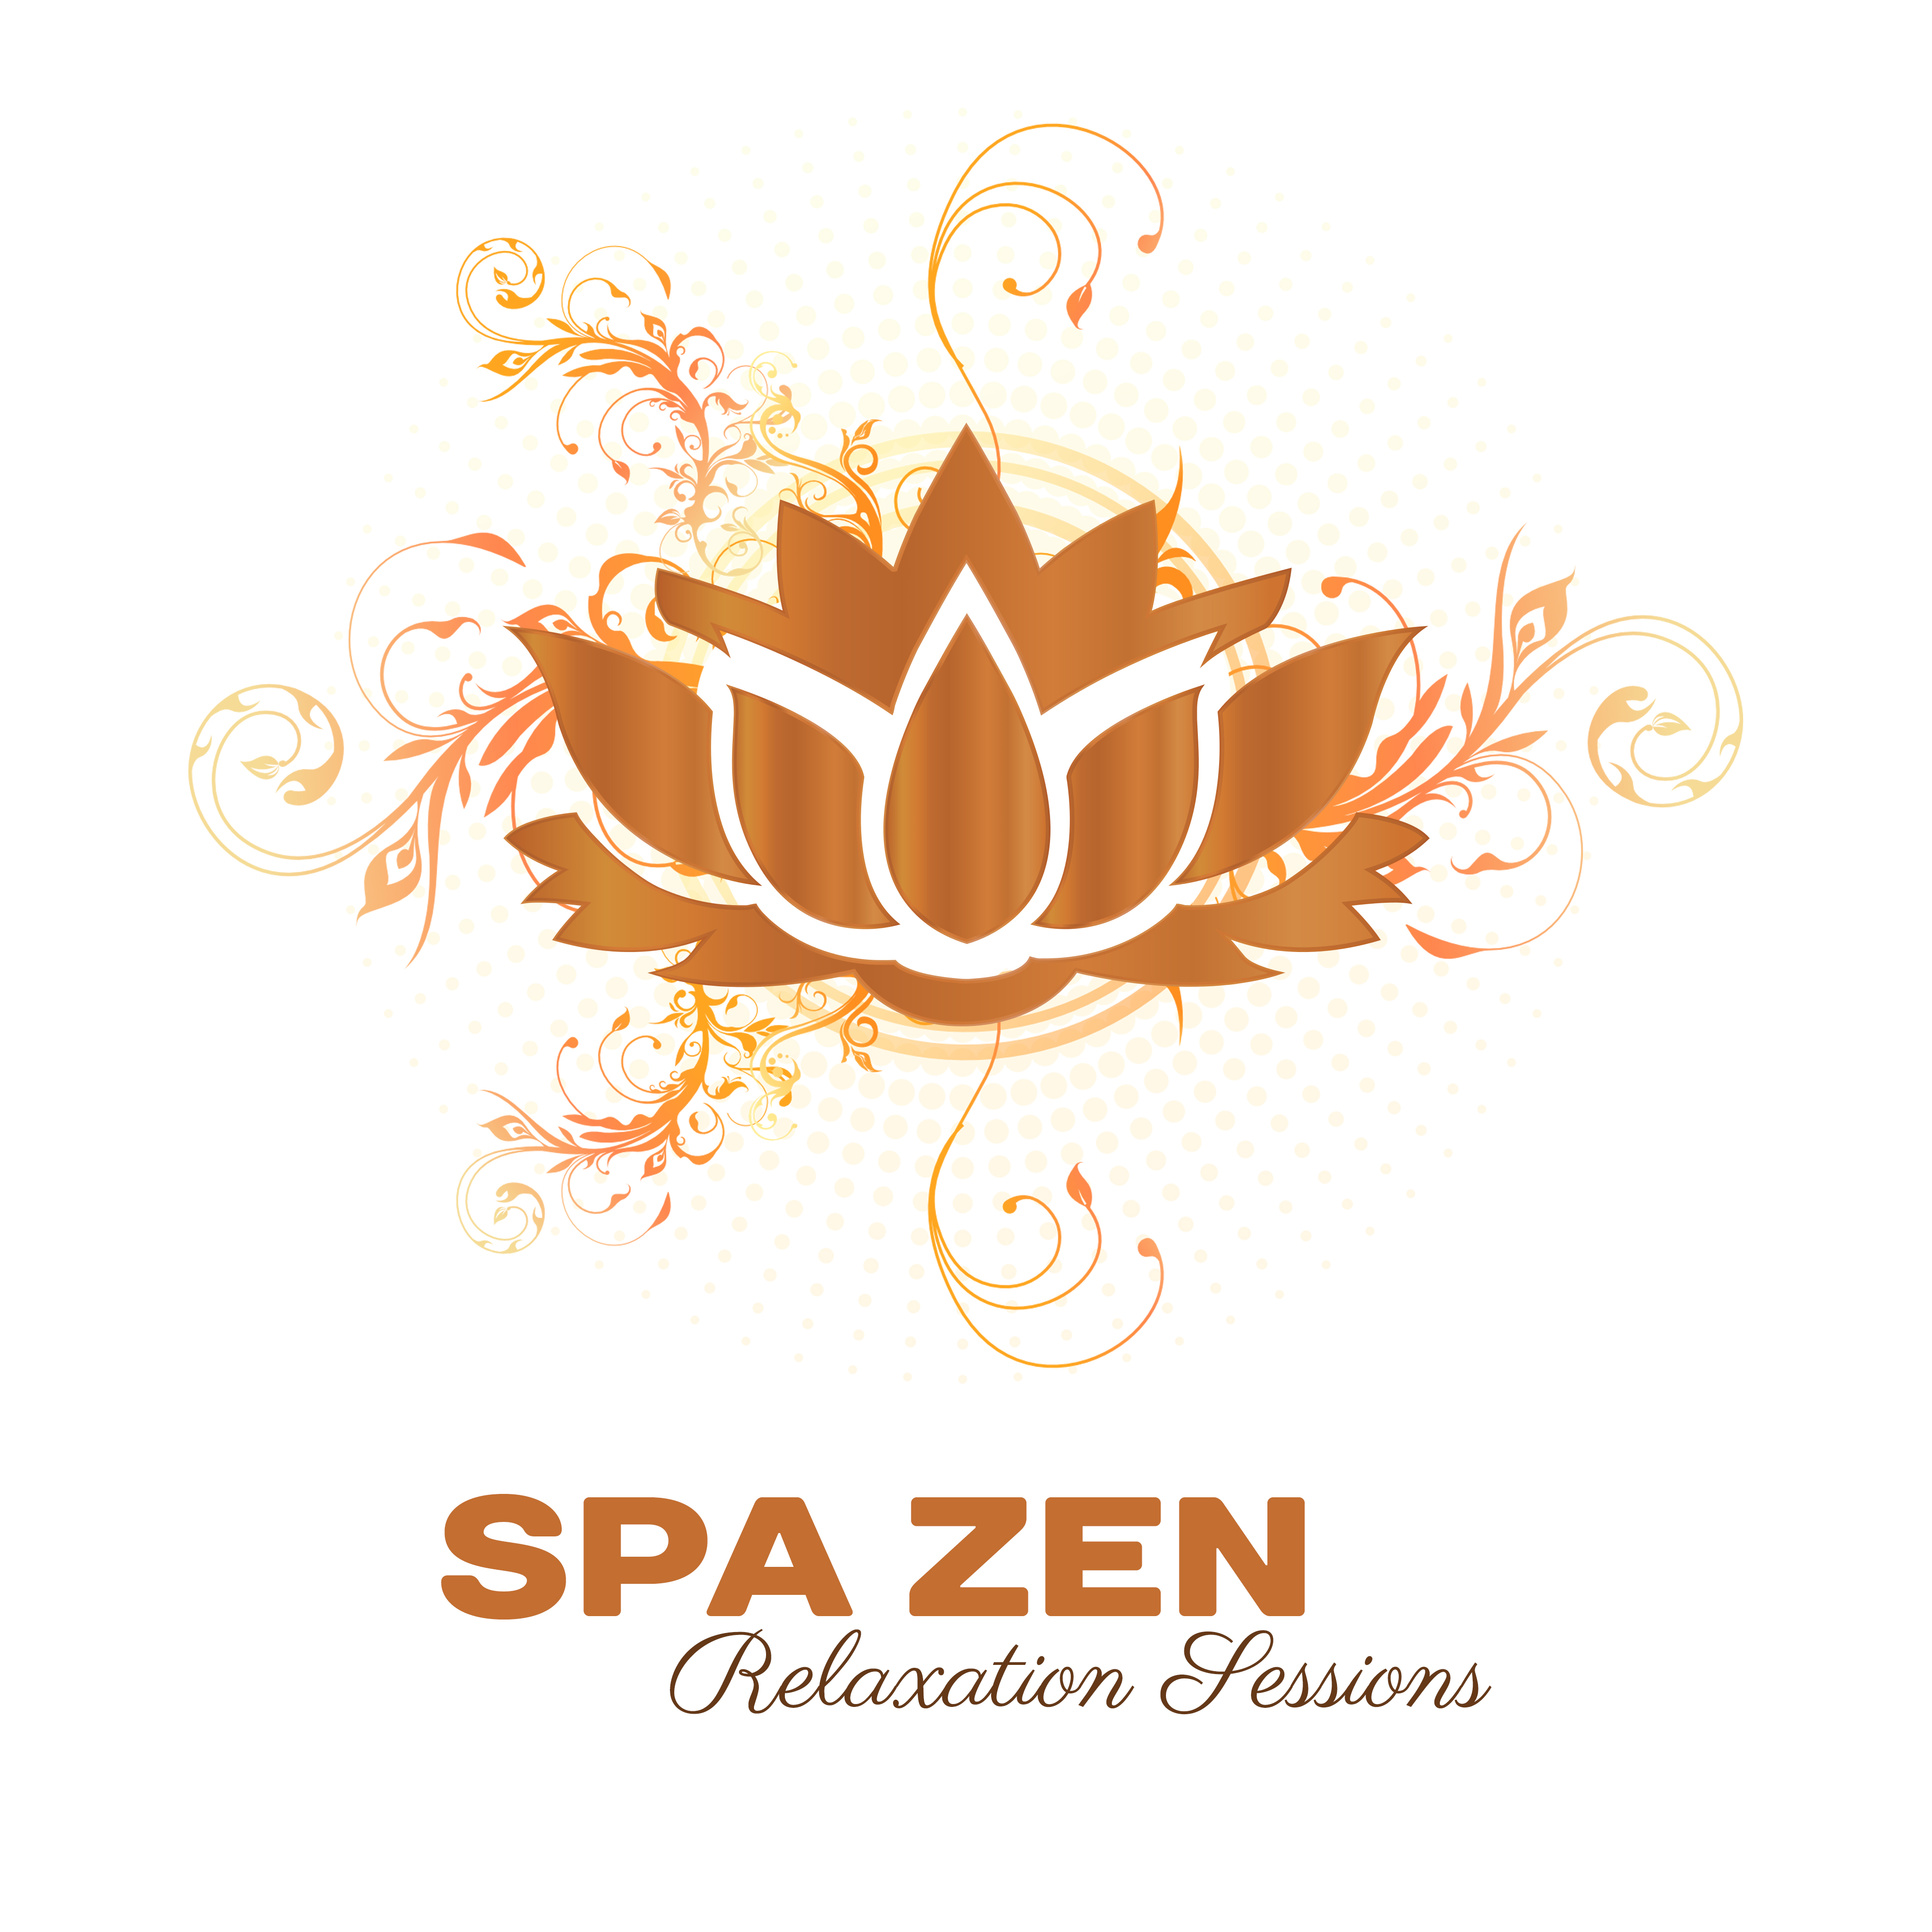 Spa Zen Relaxation Sessions – Estern Zen, Vinaya, Lotus, Solar Dawn, Shades od Relaxation